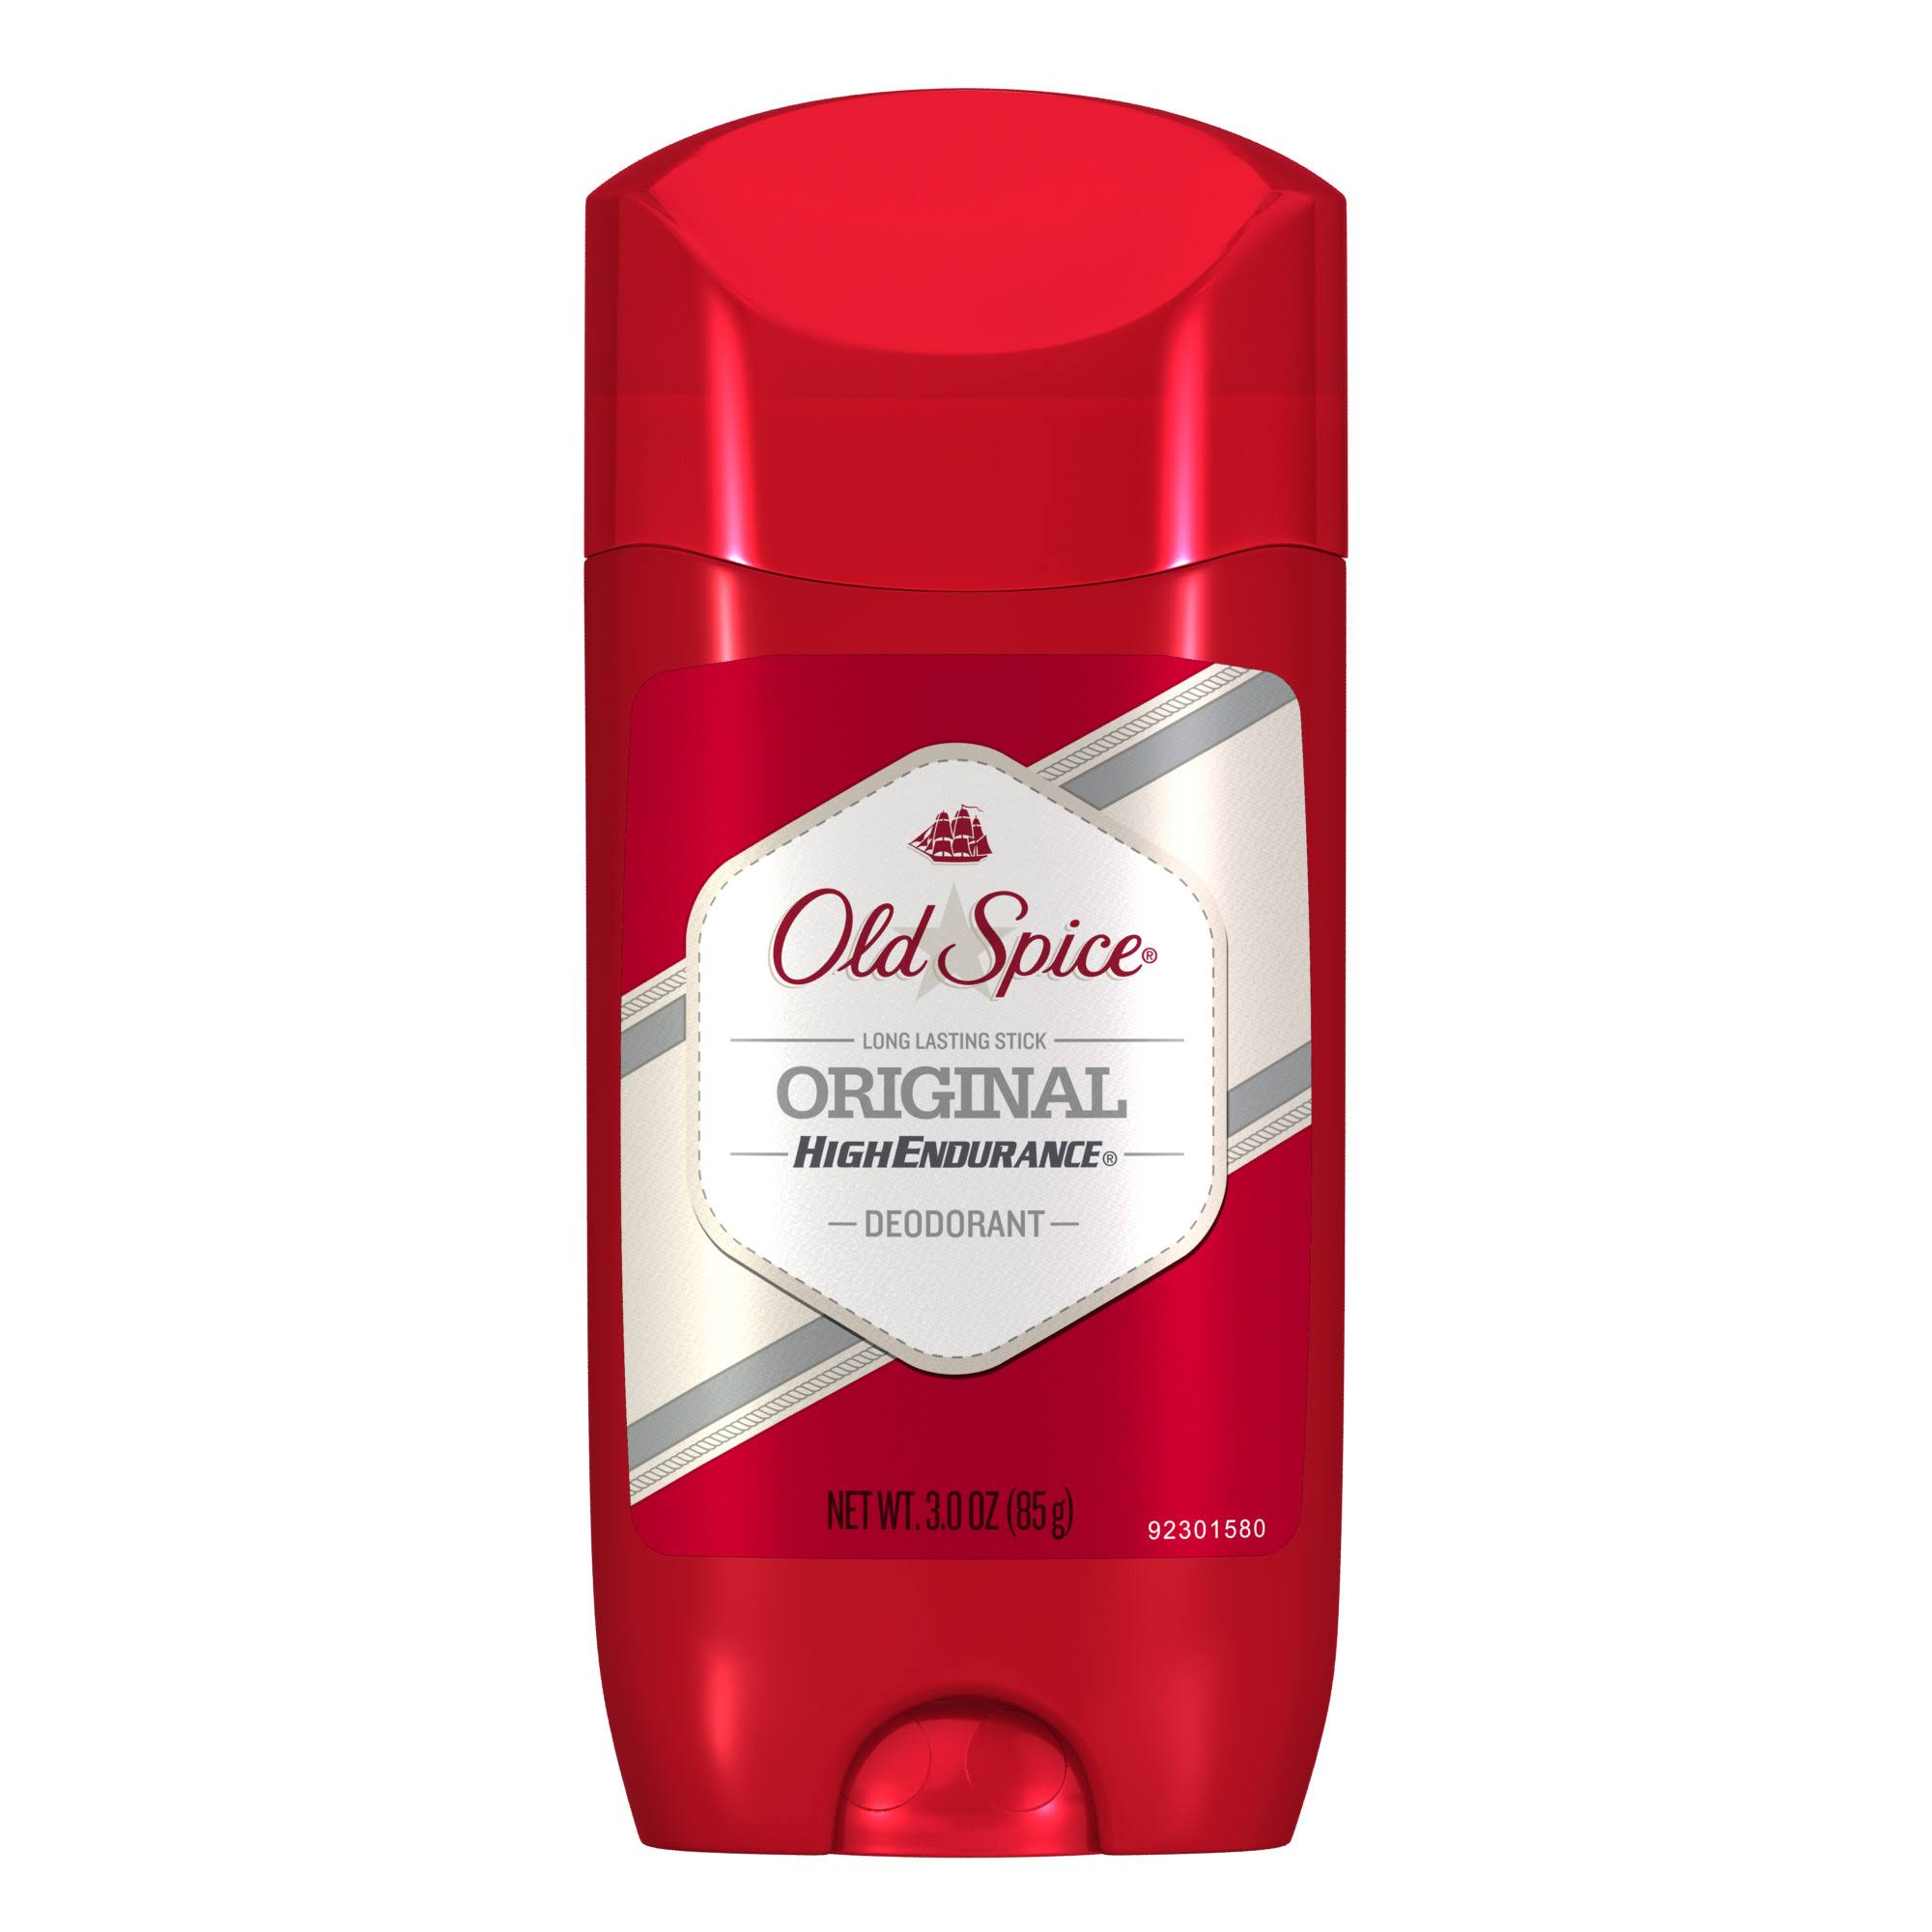 Old Spice Original High-Endurance Deodorant - 3oz